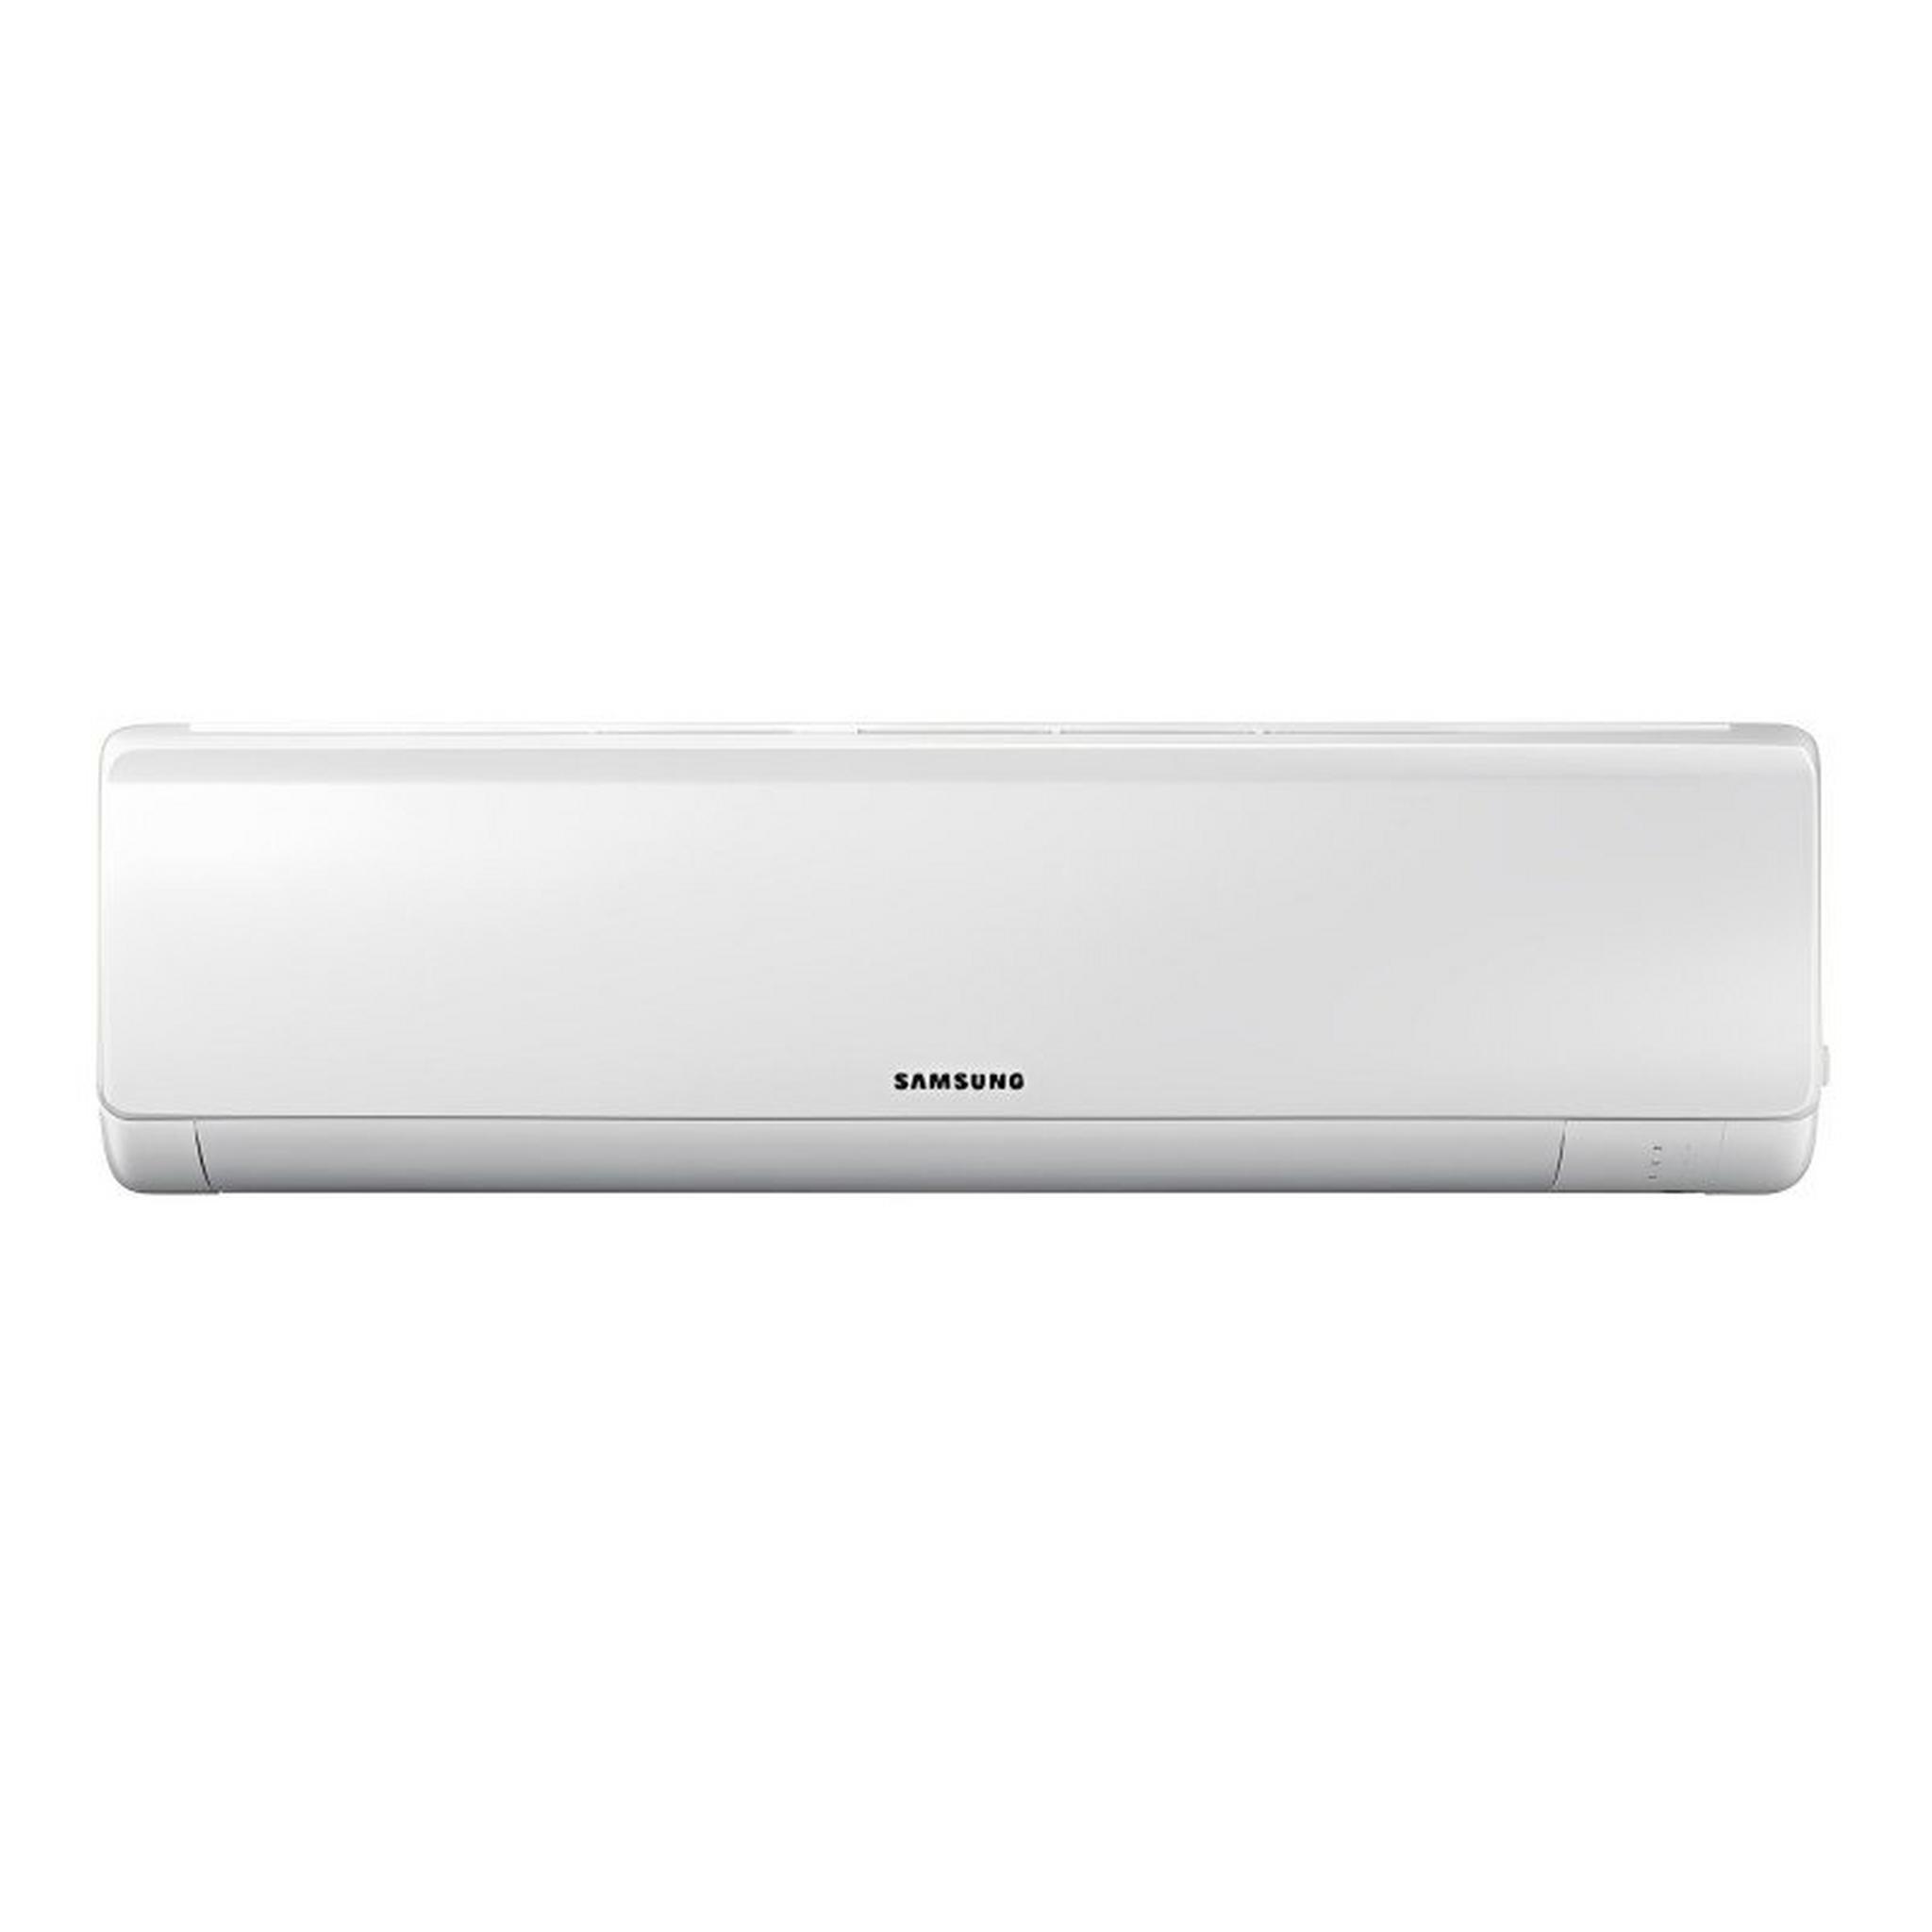 SAMSUNG Split Air Conditioner, 18000 BTU, Cooling Only, 1.5 Ton, AR18KCFHTWK – White